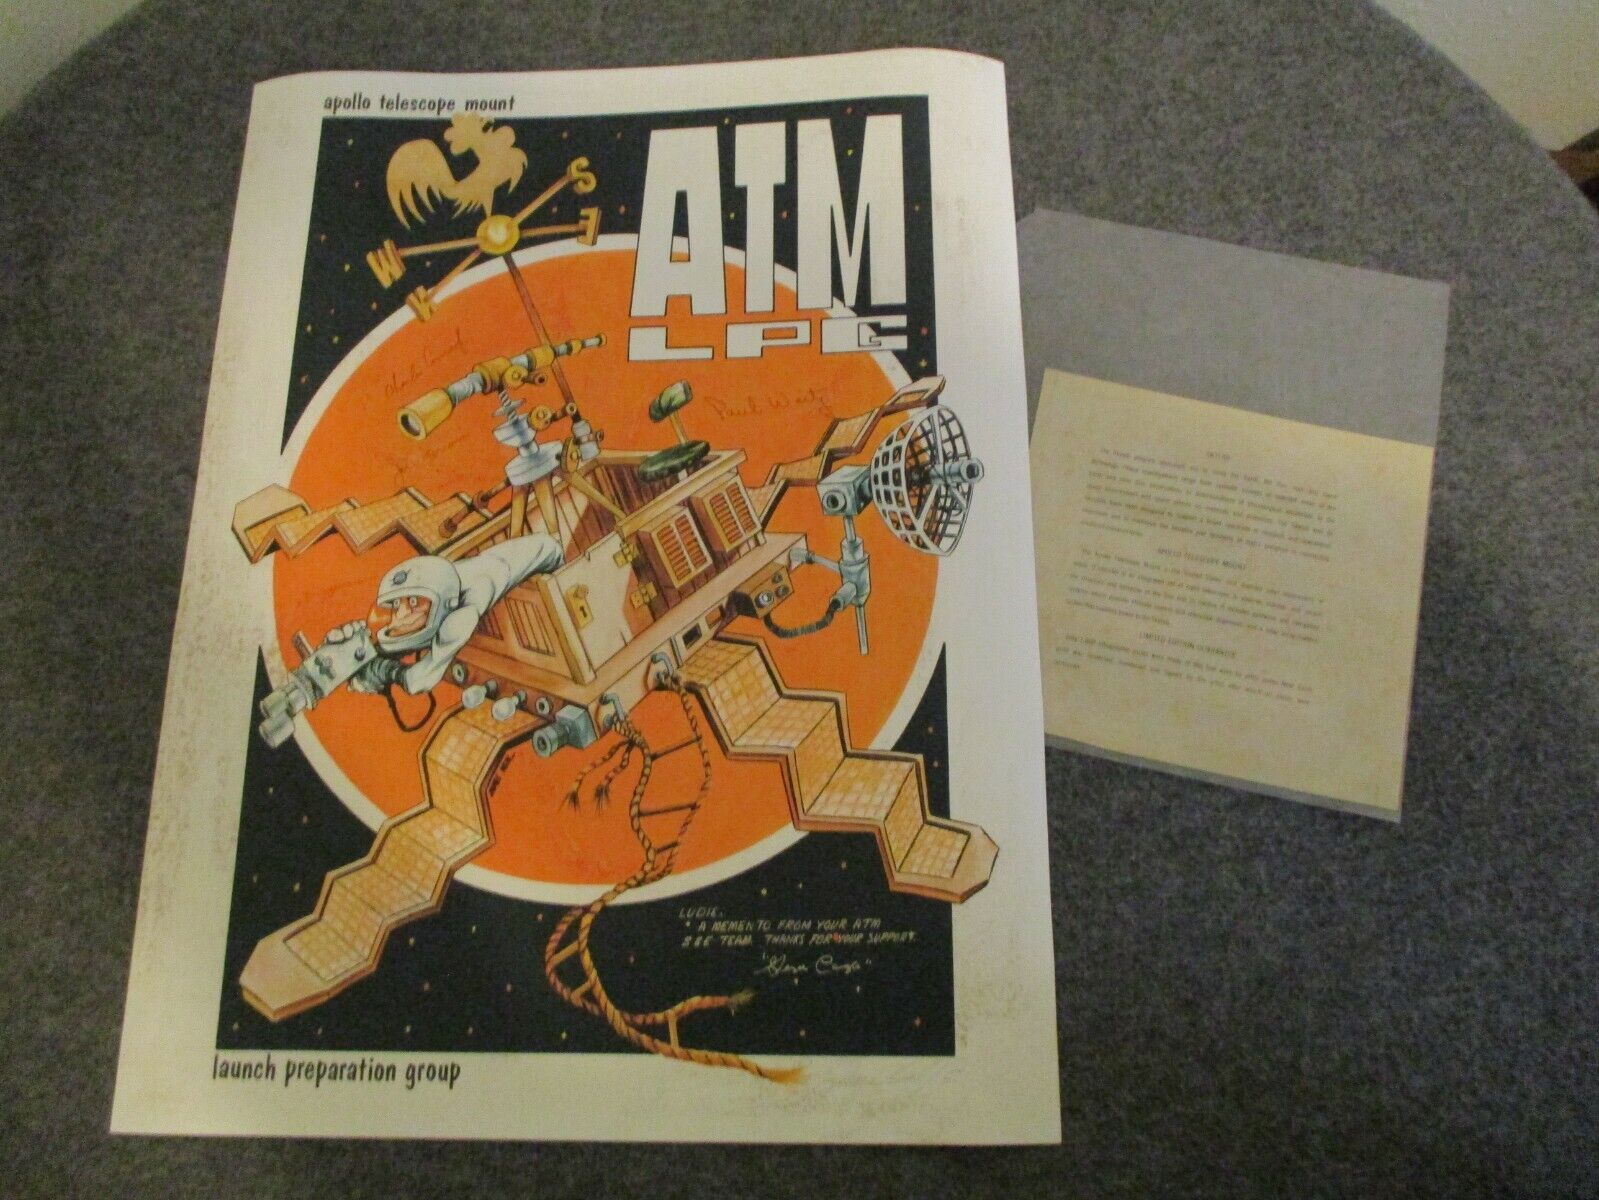 NASA APOLLO/SKYLAB II LITHO LIMITED EDITION 1973 SIGNED- ARTIST & PROJECT LEADER